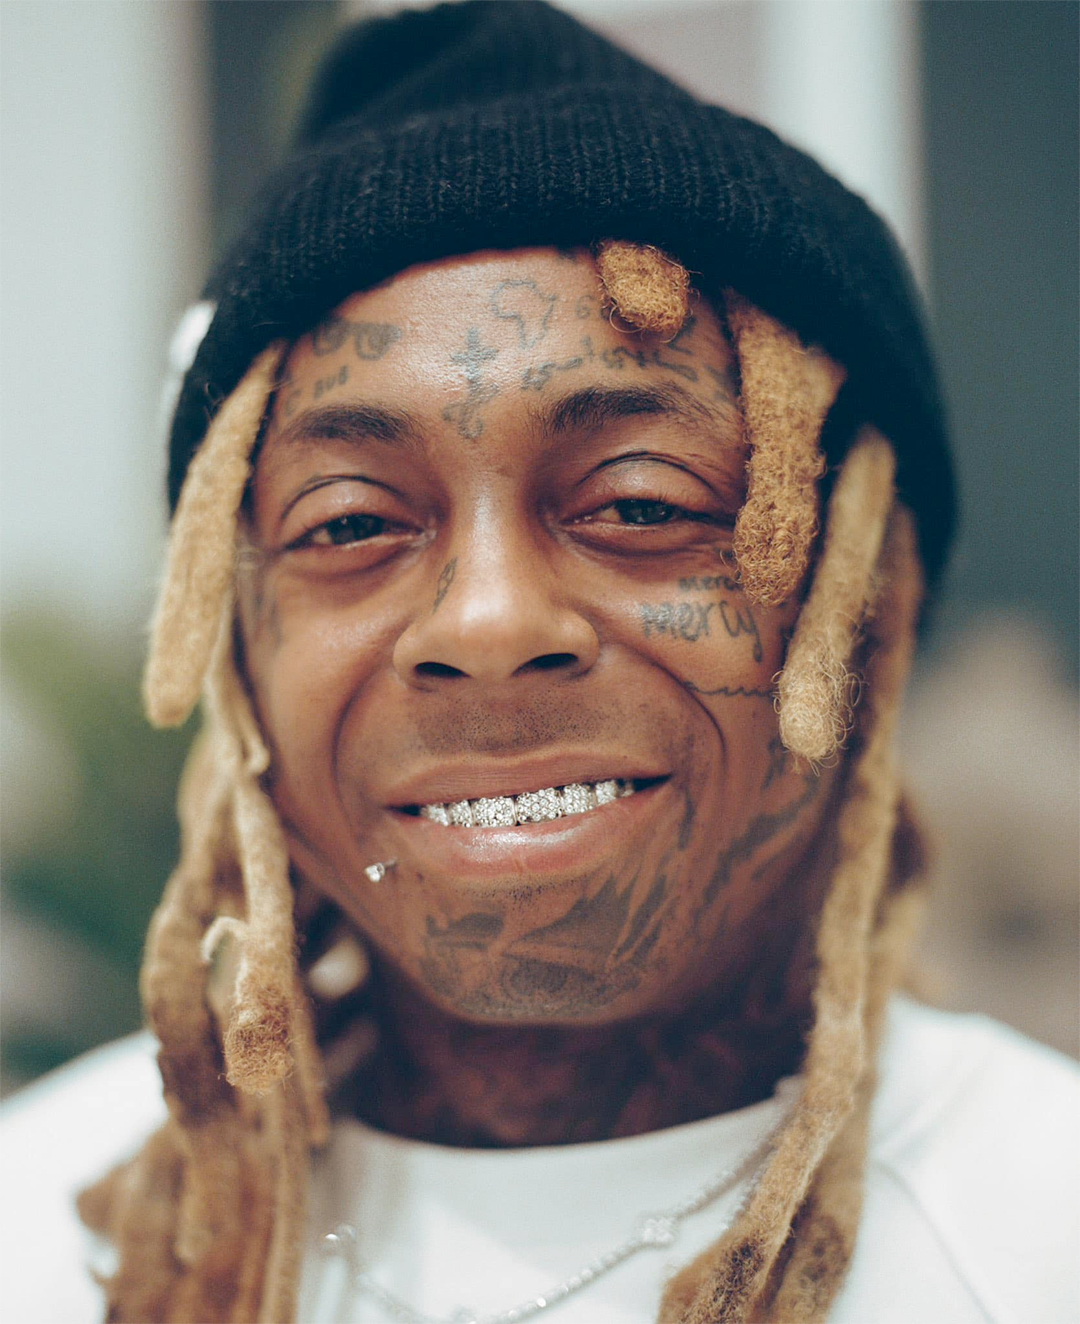 Lil Wayne Young Money Radio Show To Return For Season 2, Watch Trailer